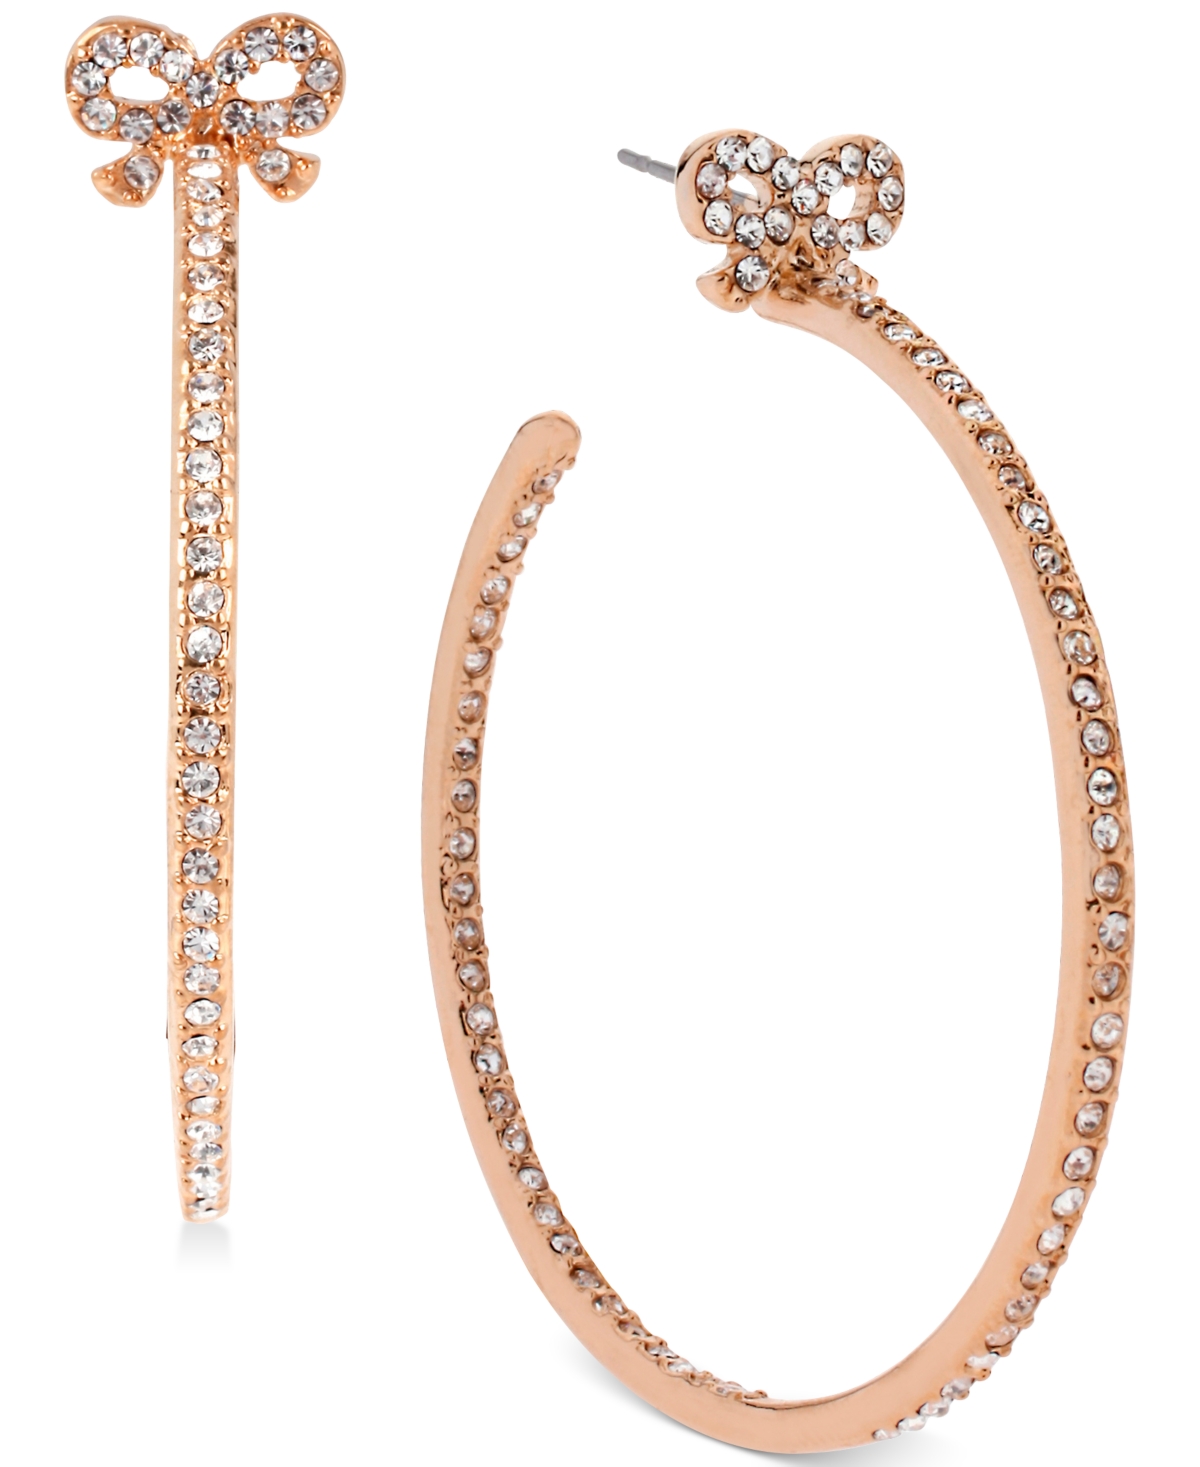 Medium Rose Gold-Tone Crystal Bow Hoop Earrings - Rose Gold